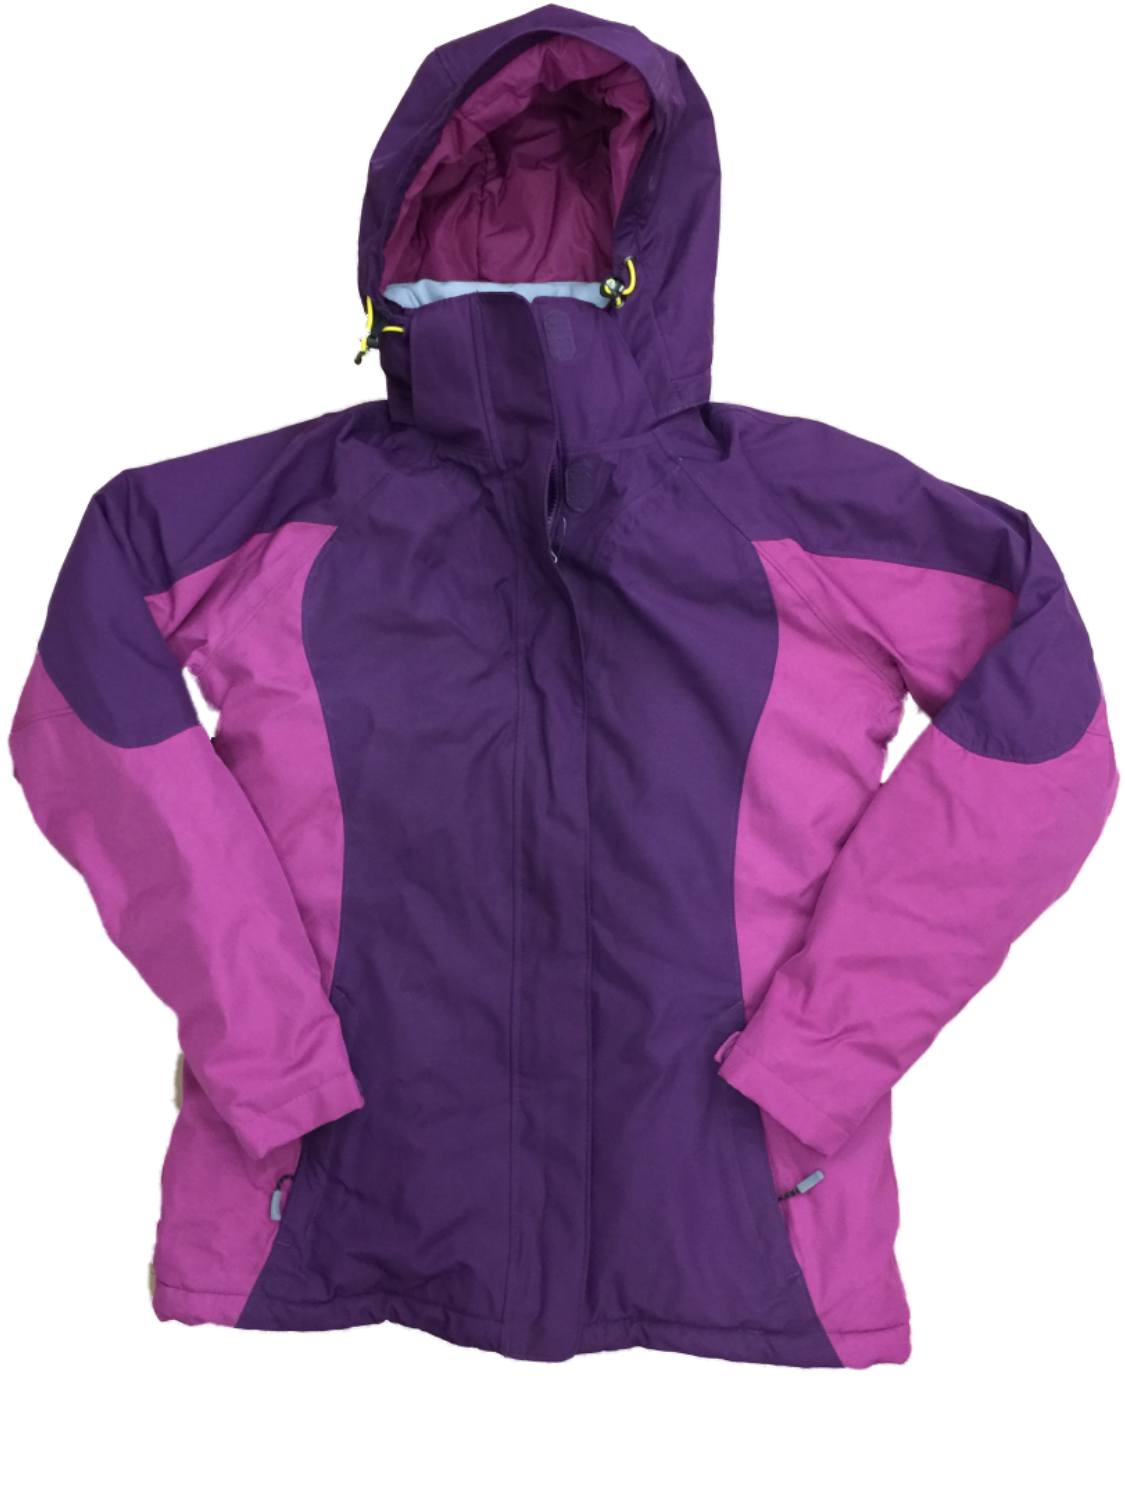 Womens Magenta & Purple Lightweight Soft Shell Jacket Activewear Coat X-Small 2-4 - image 1 of 1